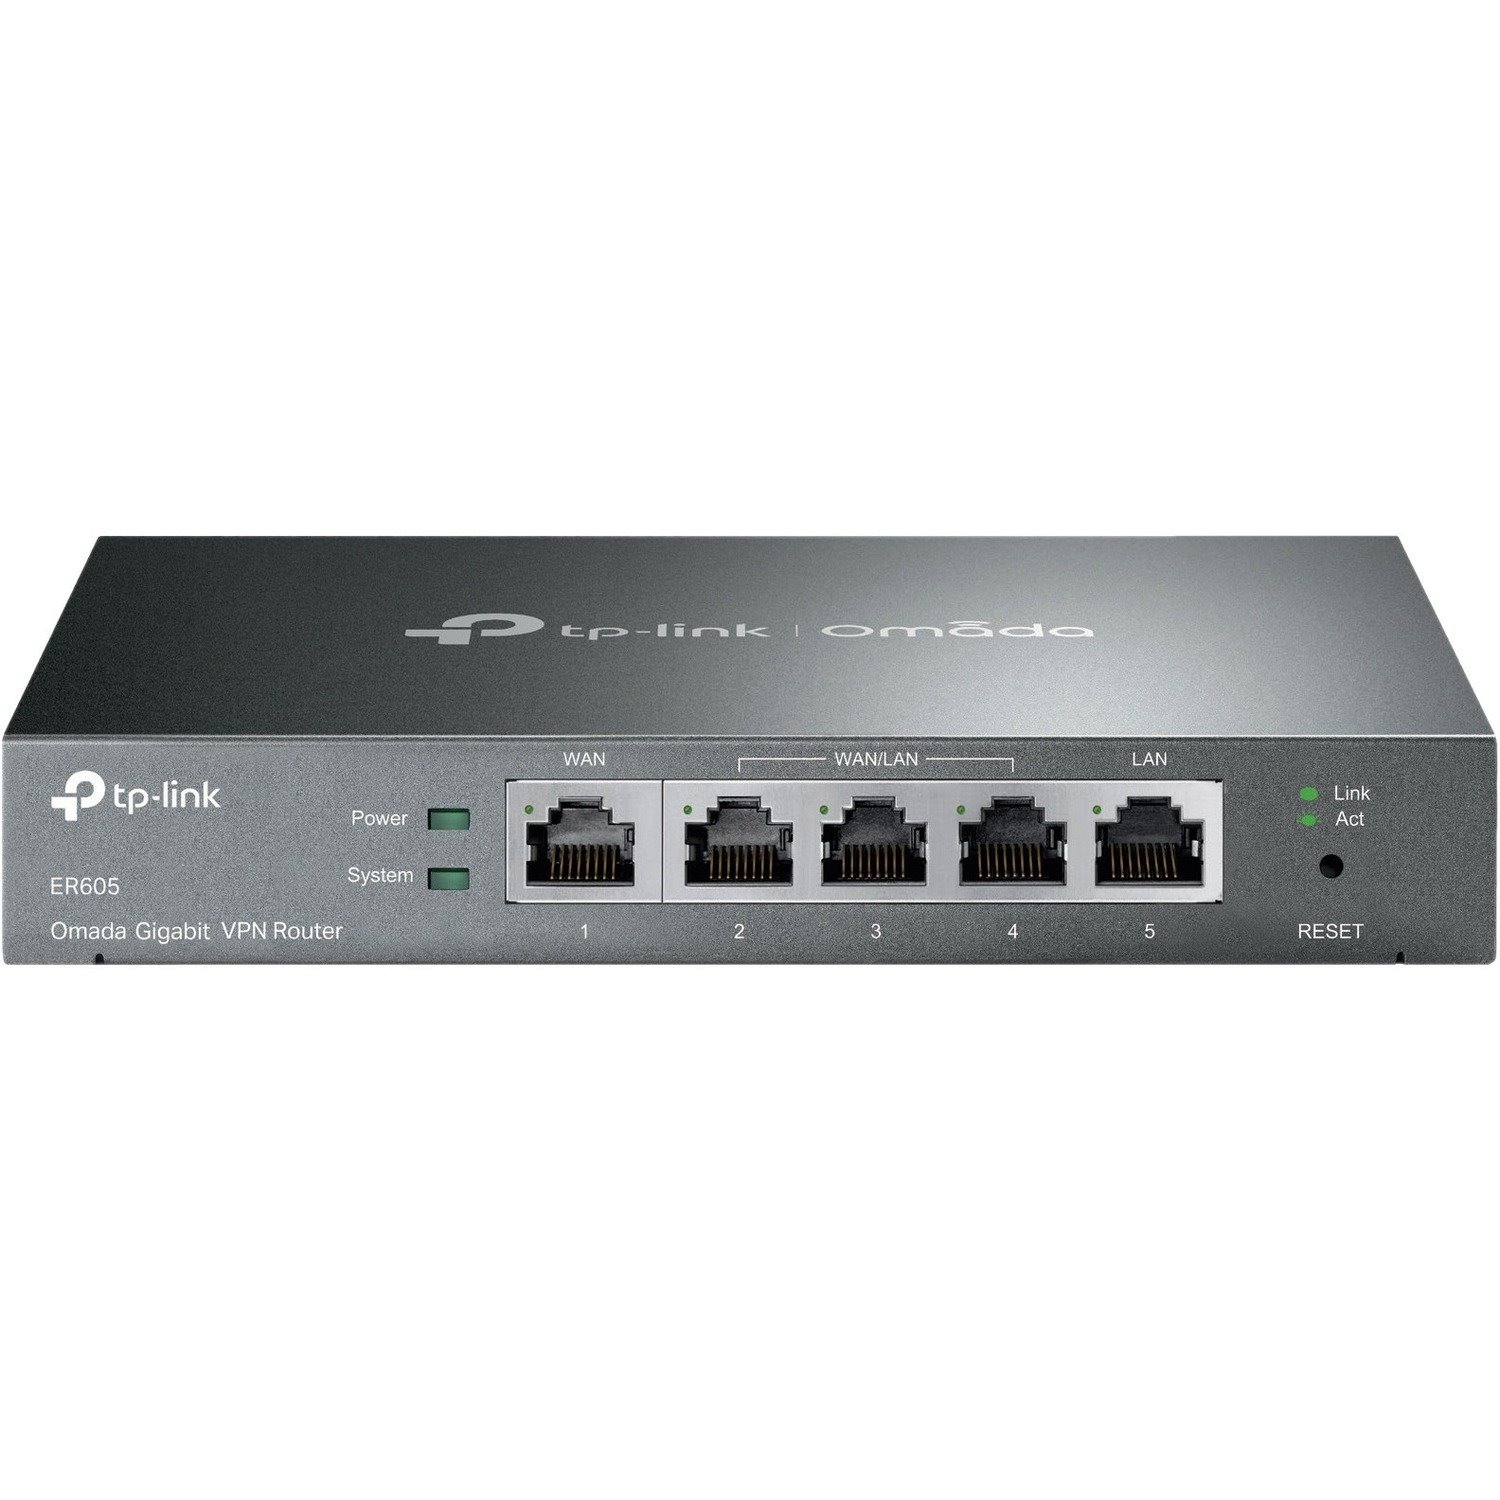 TP-Link ER605 - Multi-WAN Wired VPN Router - Limited Lifetime Warranty